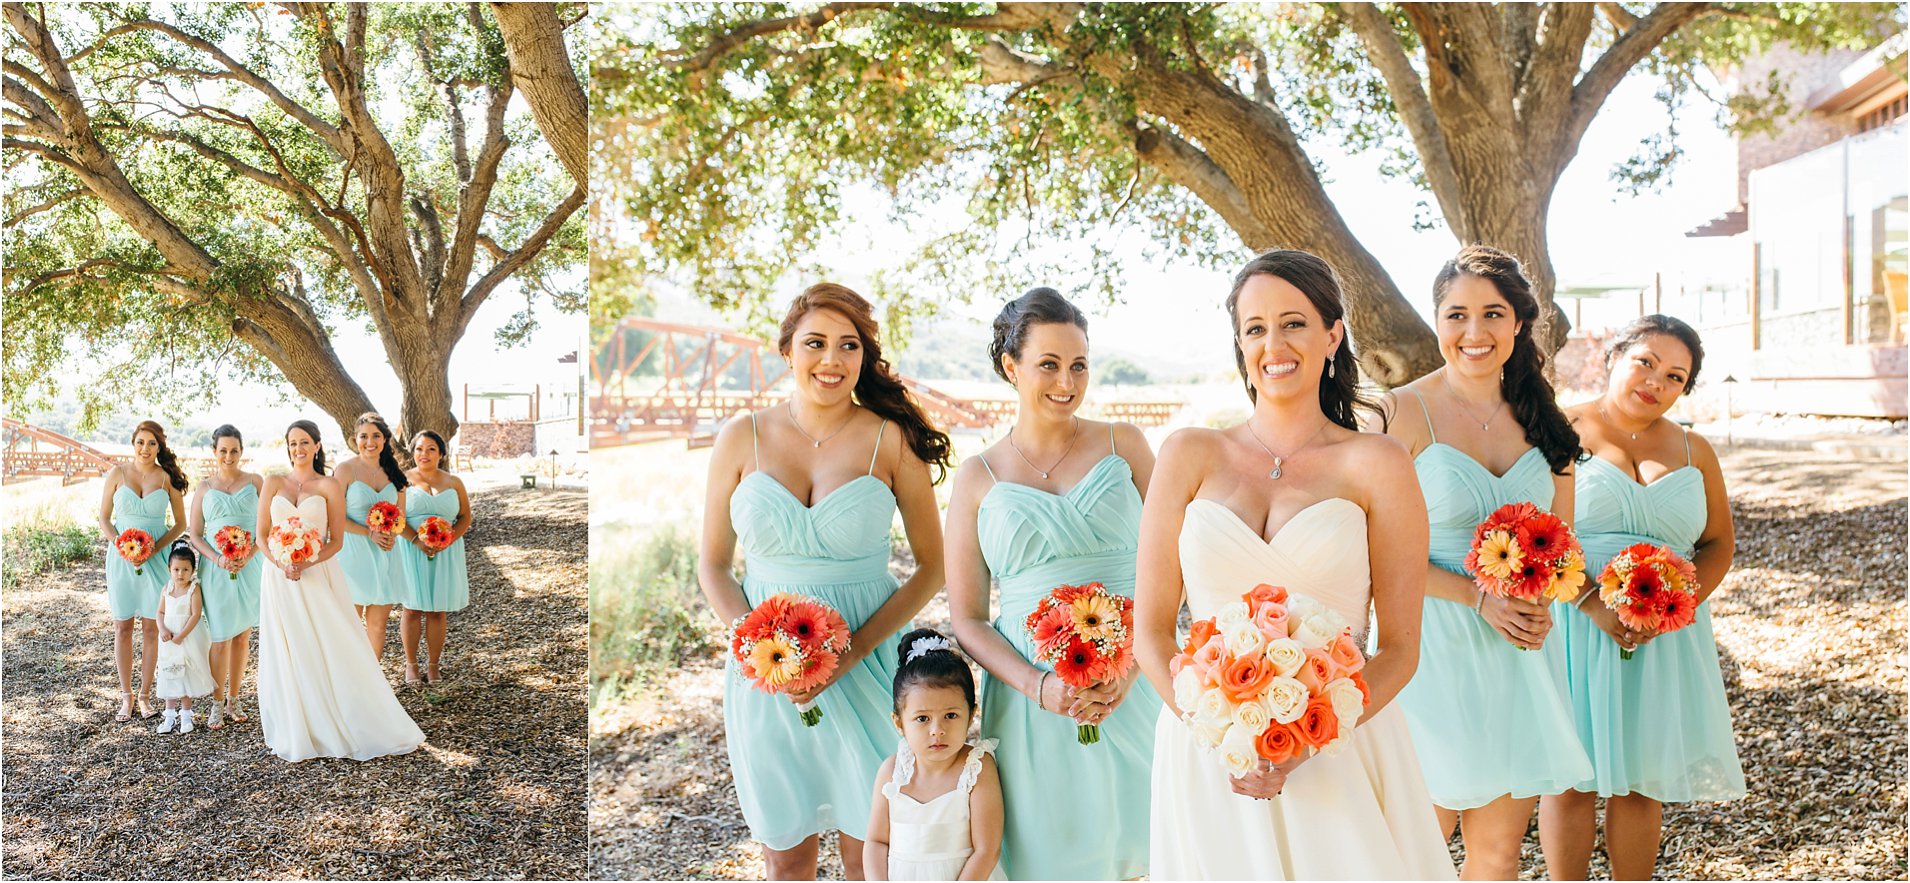 bride and bridesmaids photos in southern california